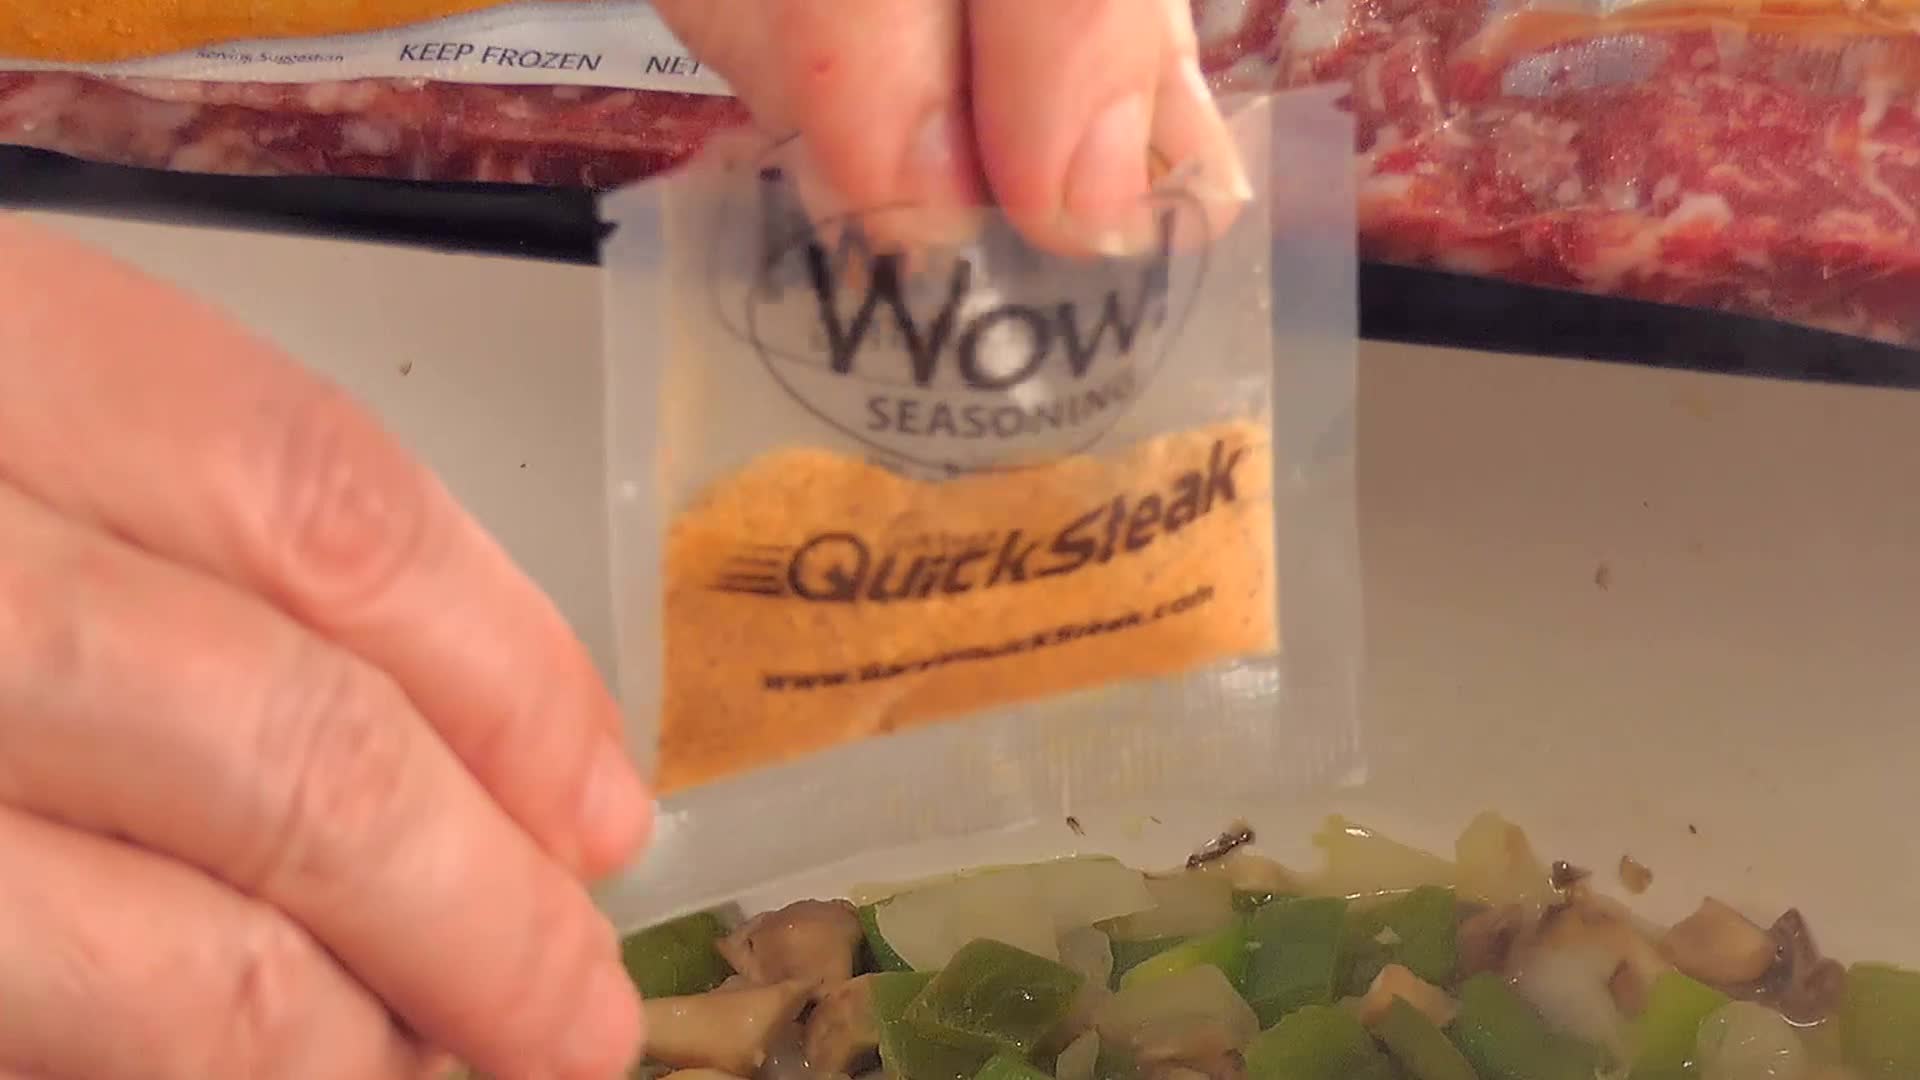 Garys QuickSteak Wow! Seasoning, 2 Pack, All-Purpose